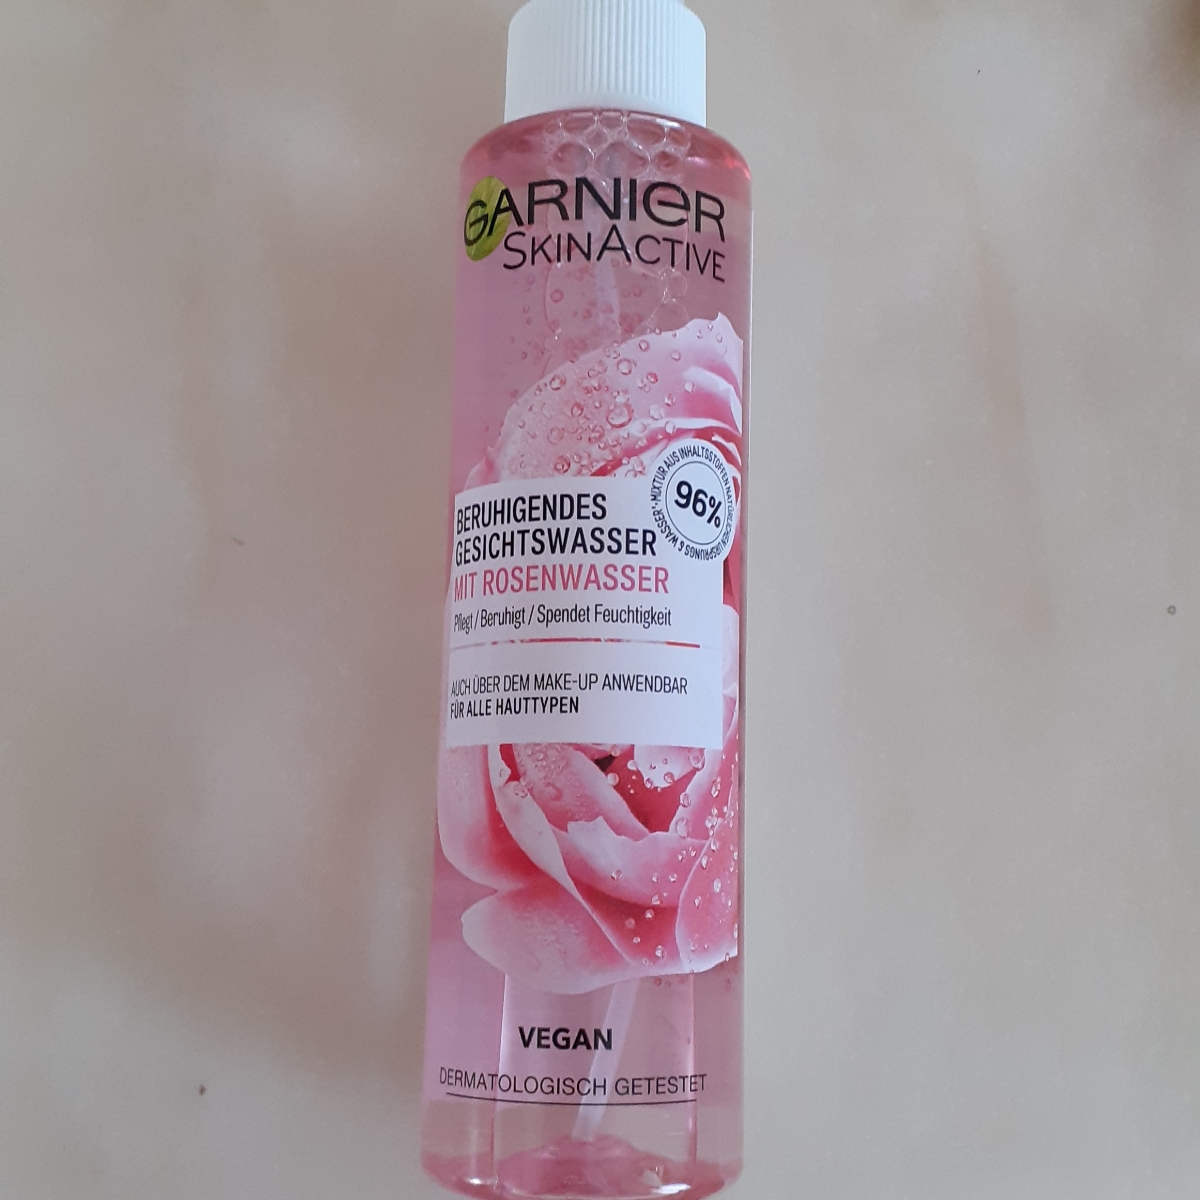 Garnier rosas de agua | Reviews abillion